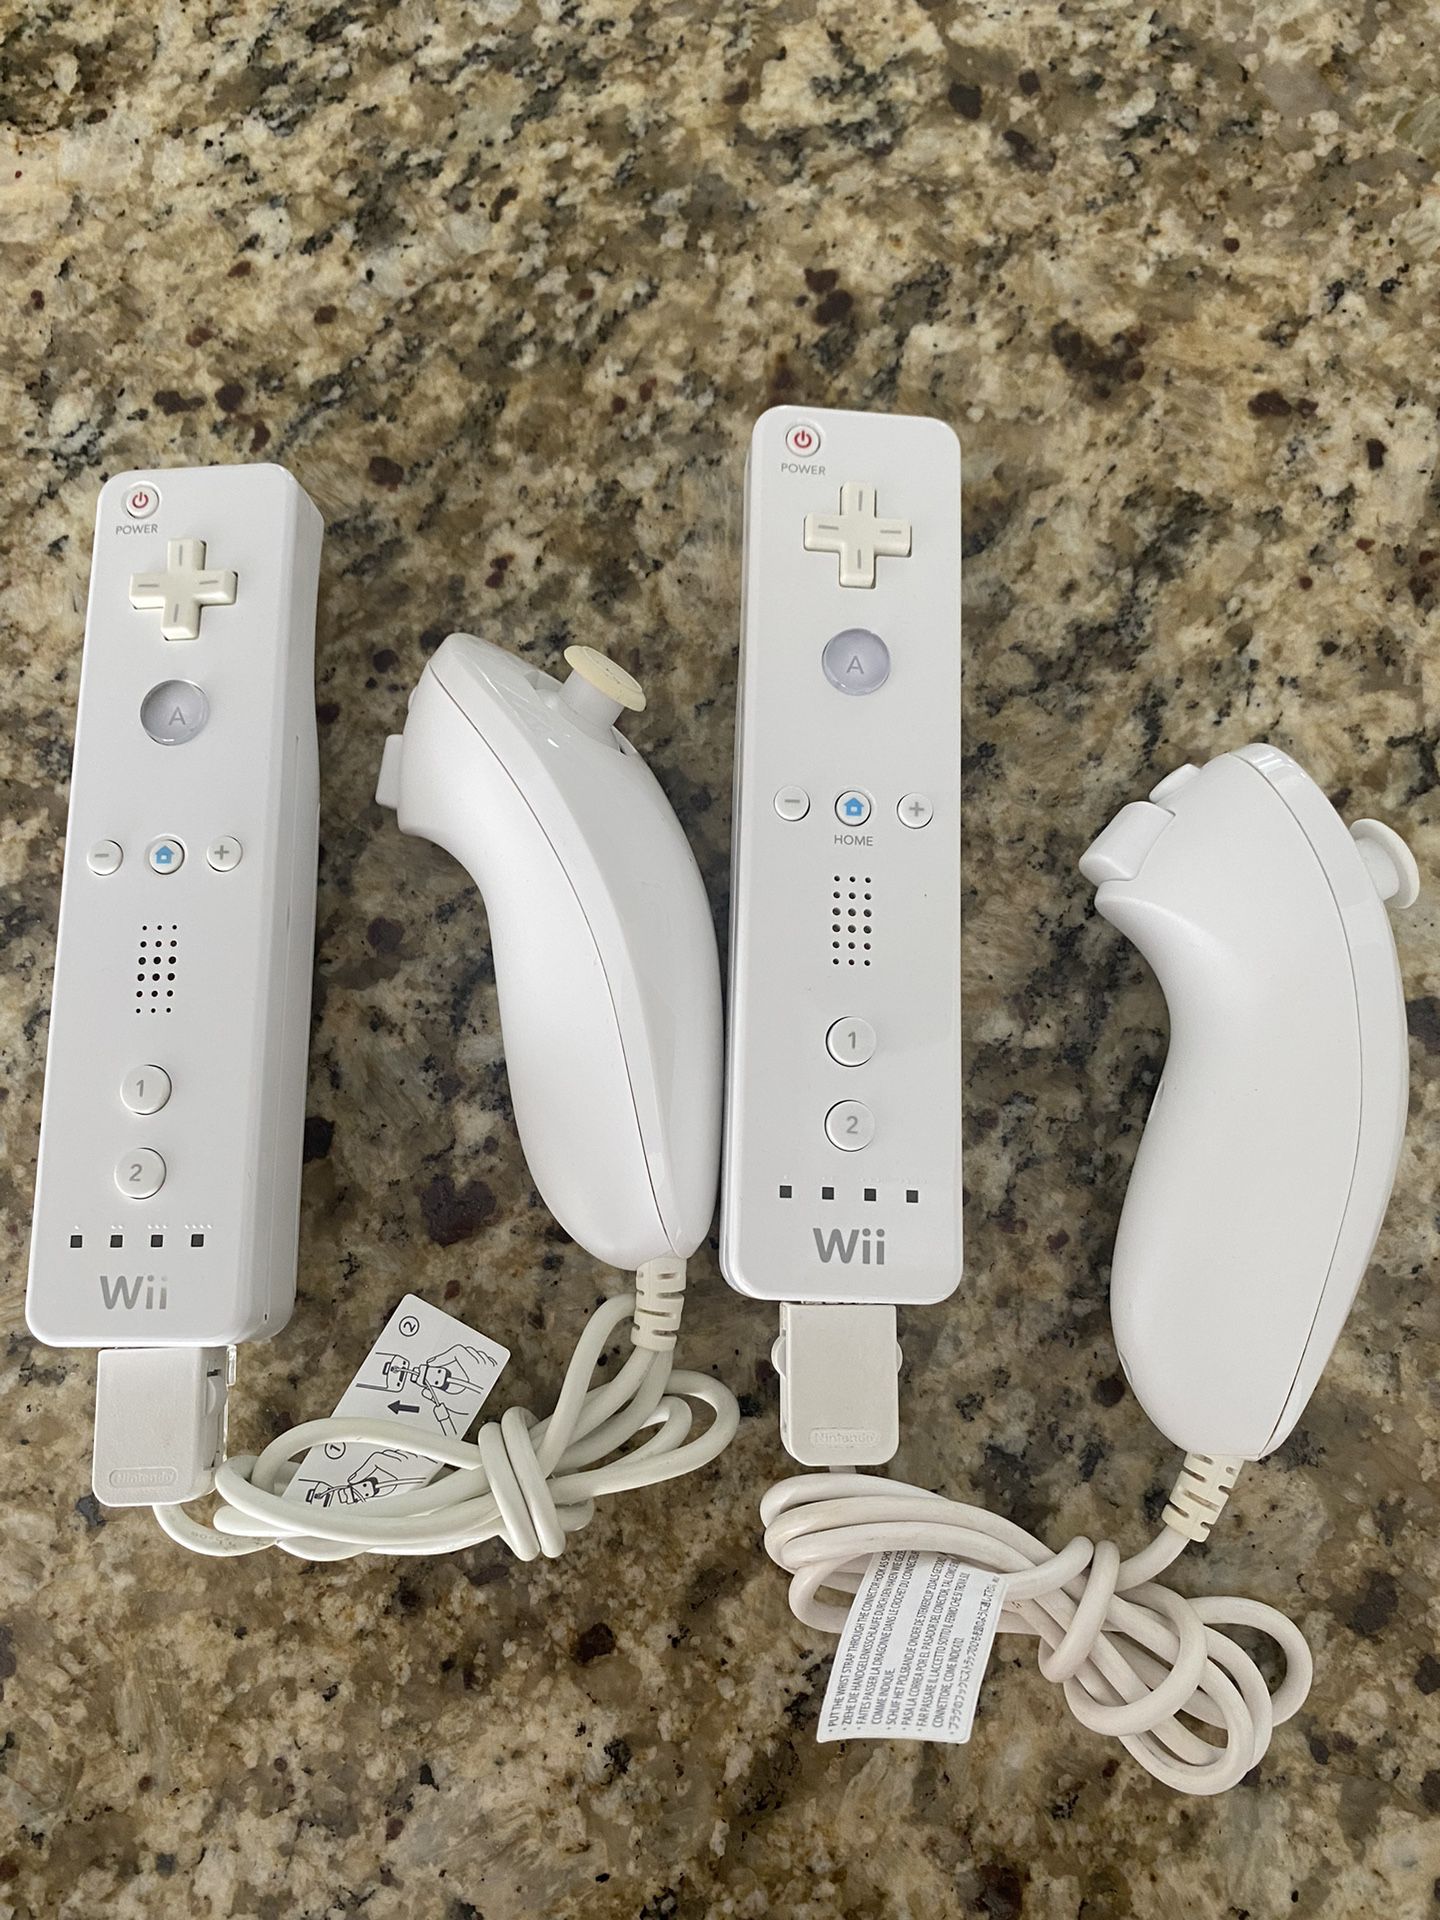 Nintendo Wii Controller Nintendo Wii Remote Nintendo Wii U Controller Nintendo Wii U Remote Nintendo Wii Nunchuck